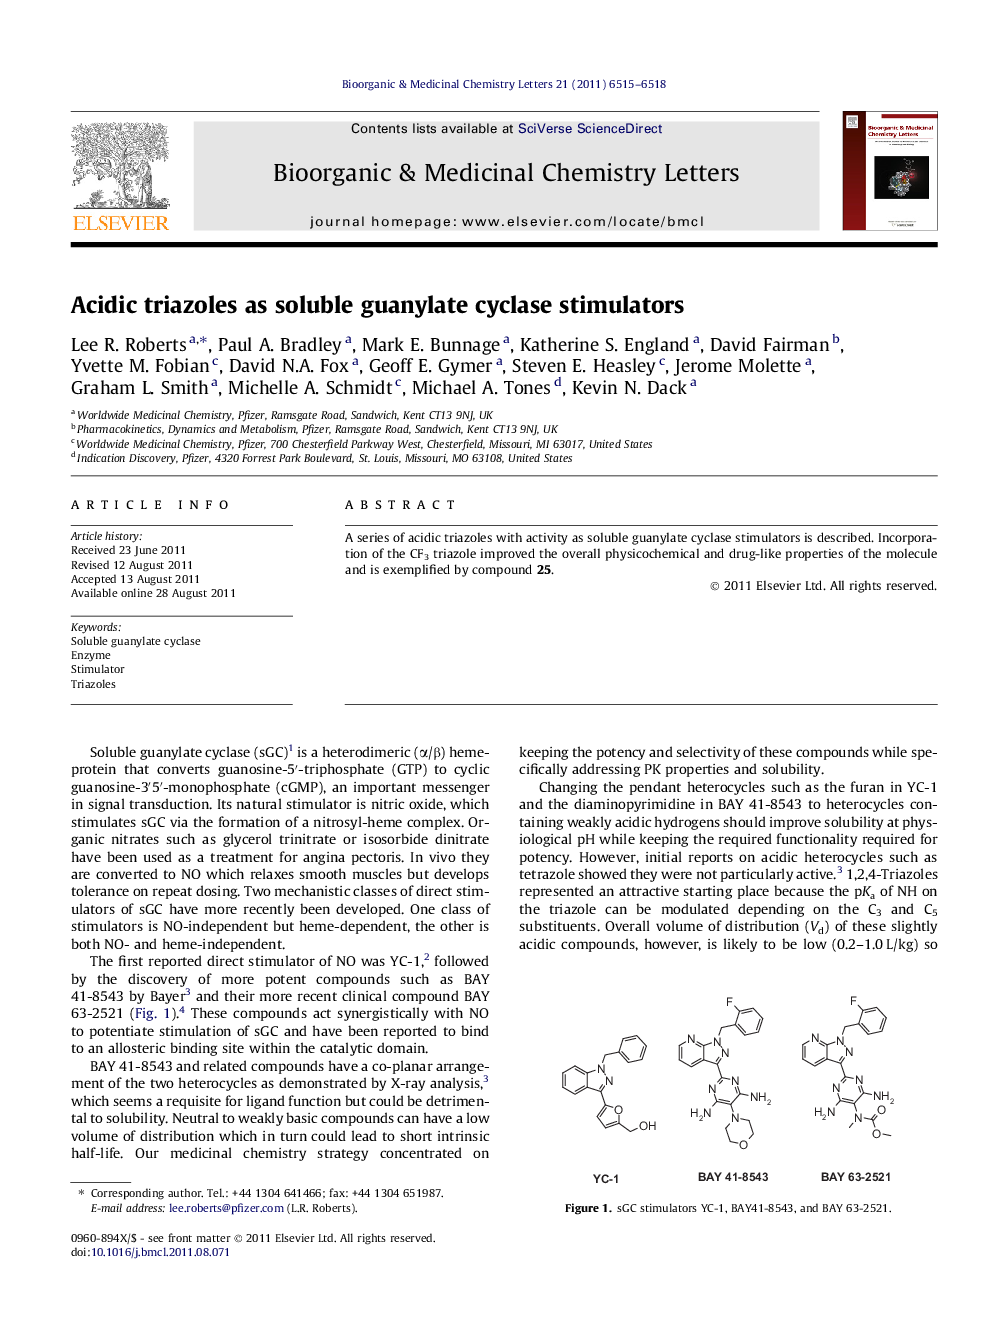 Acidic triazoles as soluble guanylate cyclase stimulators